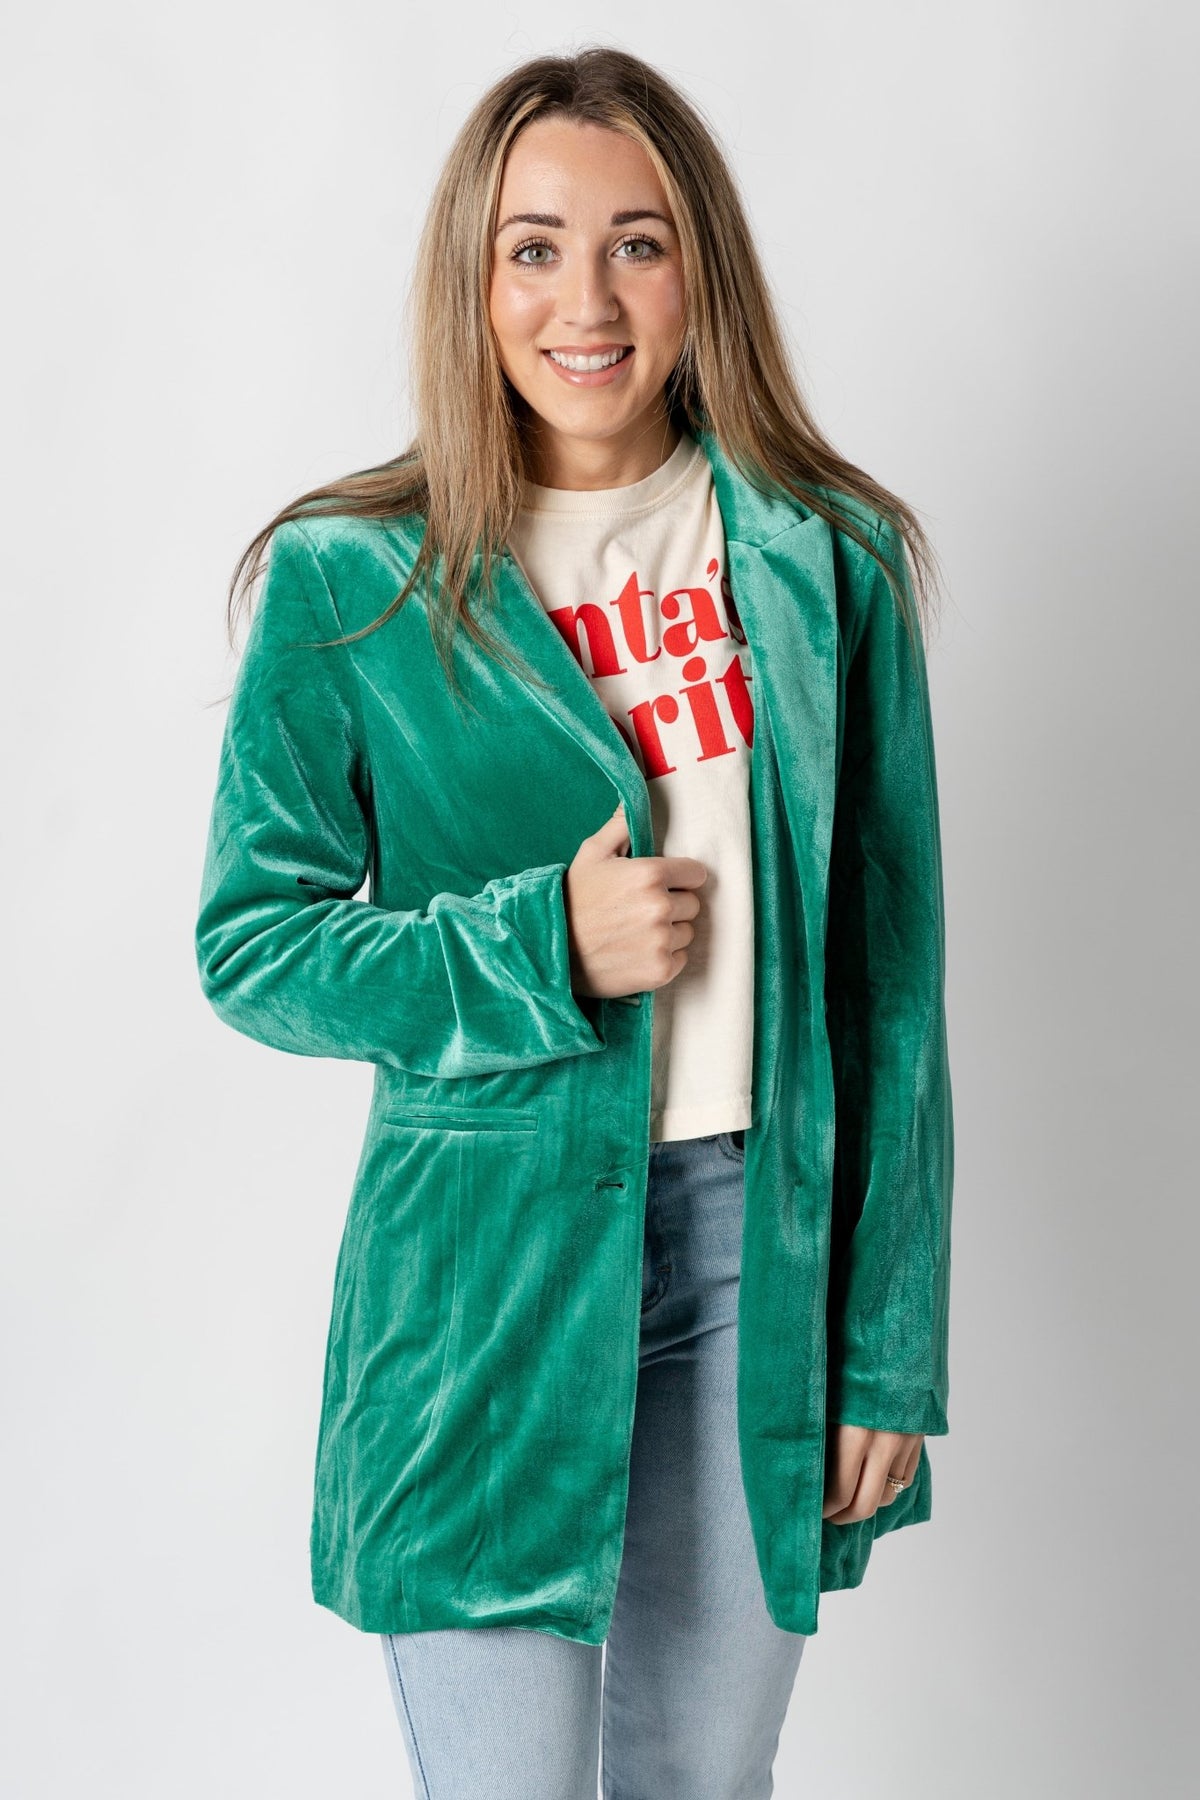 Velvet blazer emerald – Trendy Jackets | Cute Fashion Blazers at Lush Fashion Lounge Boutique in Oklahoma City